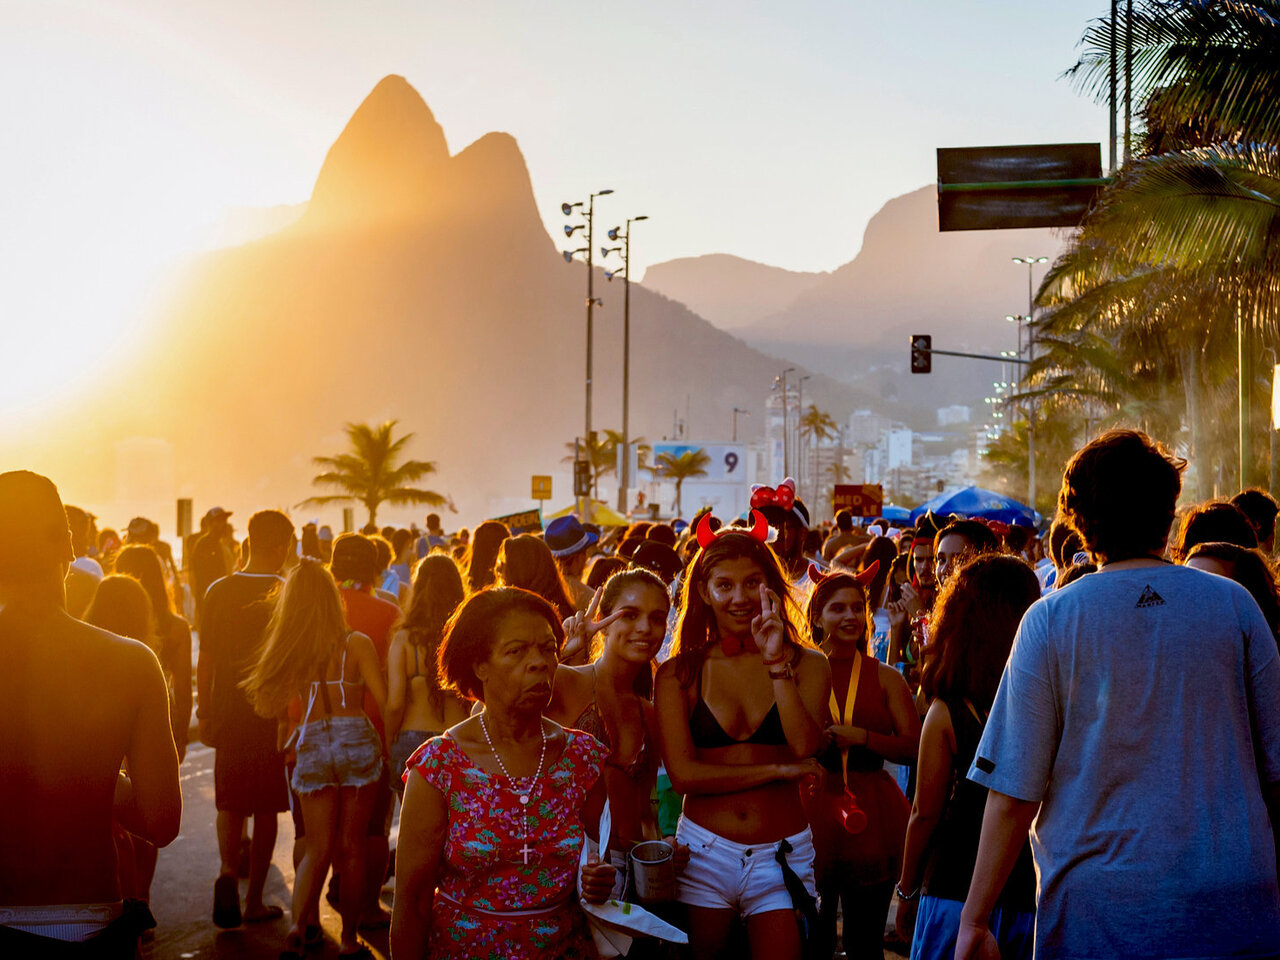 Lista de bairros onde acontece Carnaval de Blocos de Rua no RJ